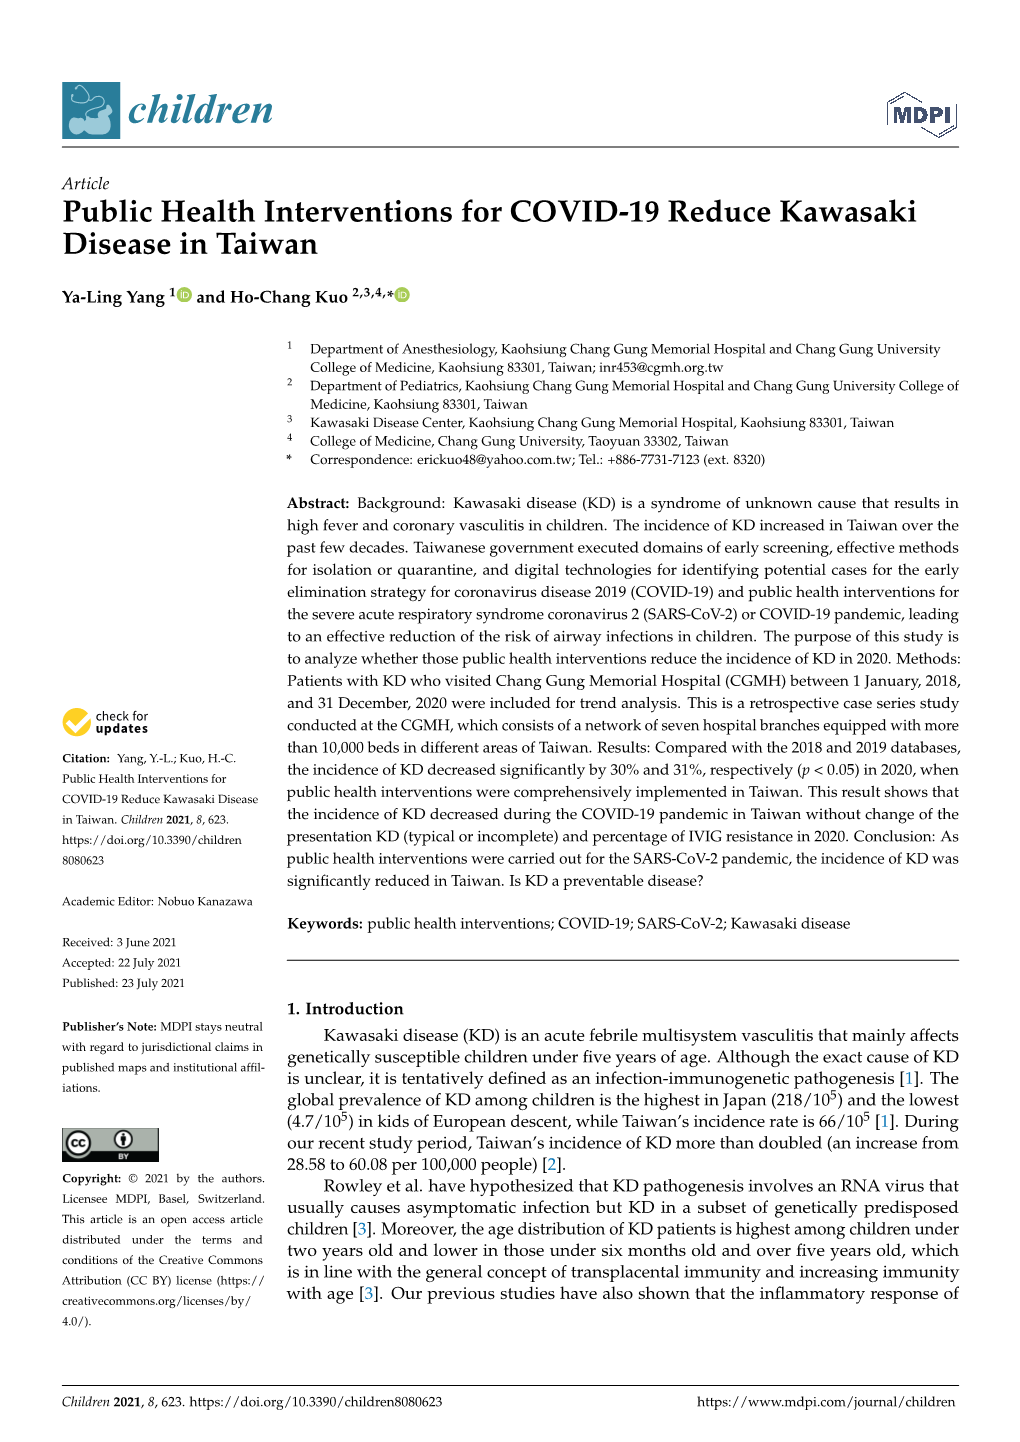 Public Health Interventions for COVID-19 Reduce Kawasaki Disease in Taiwan